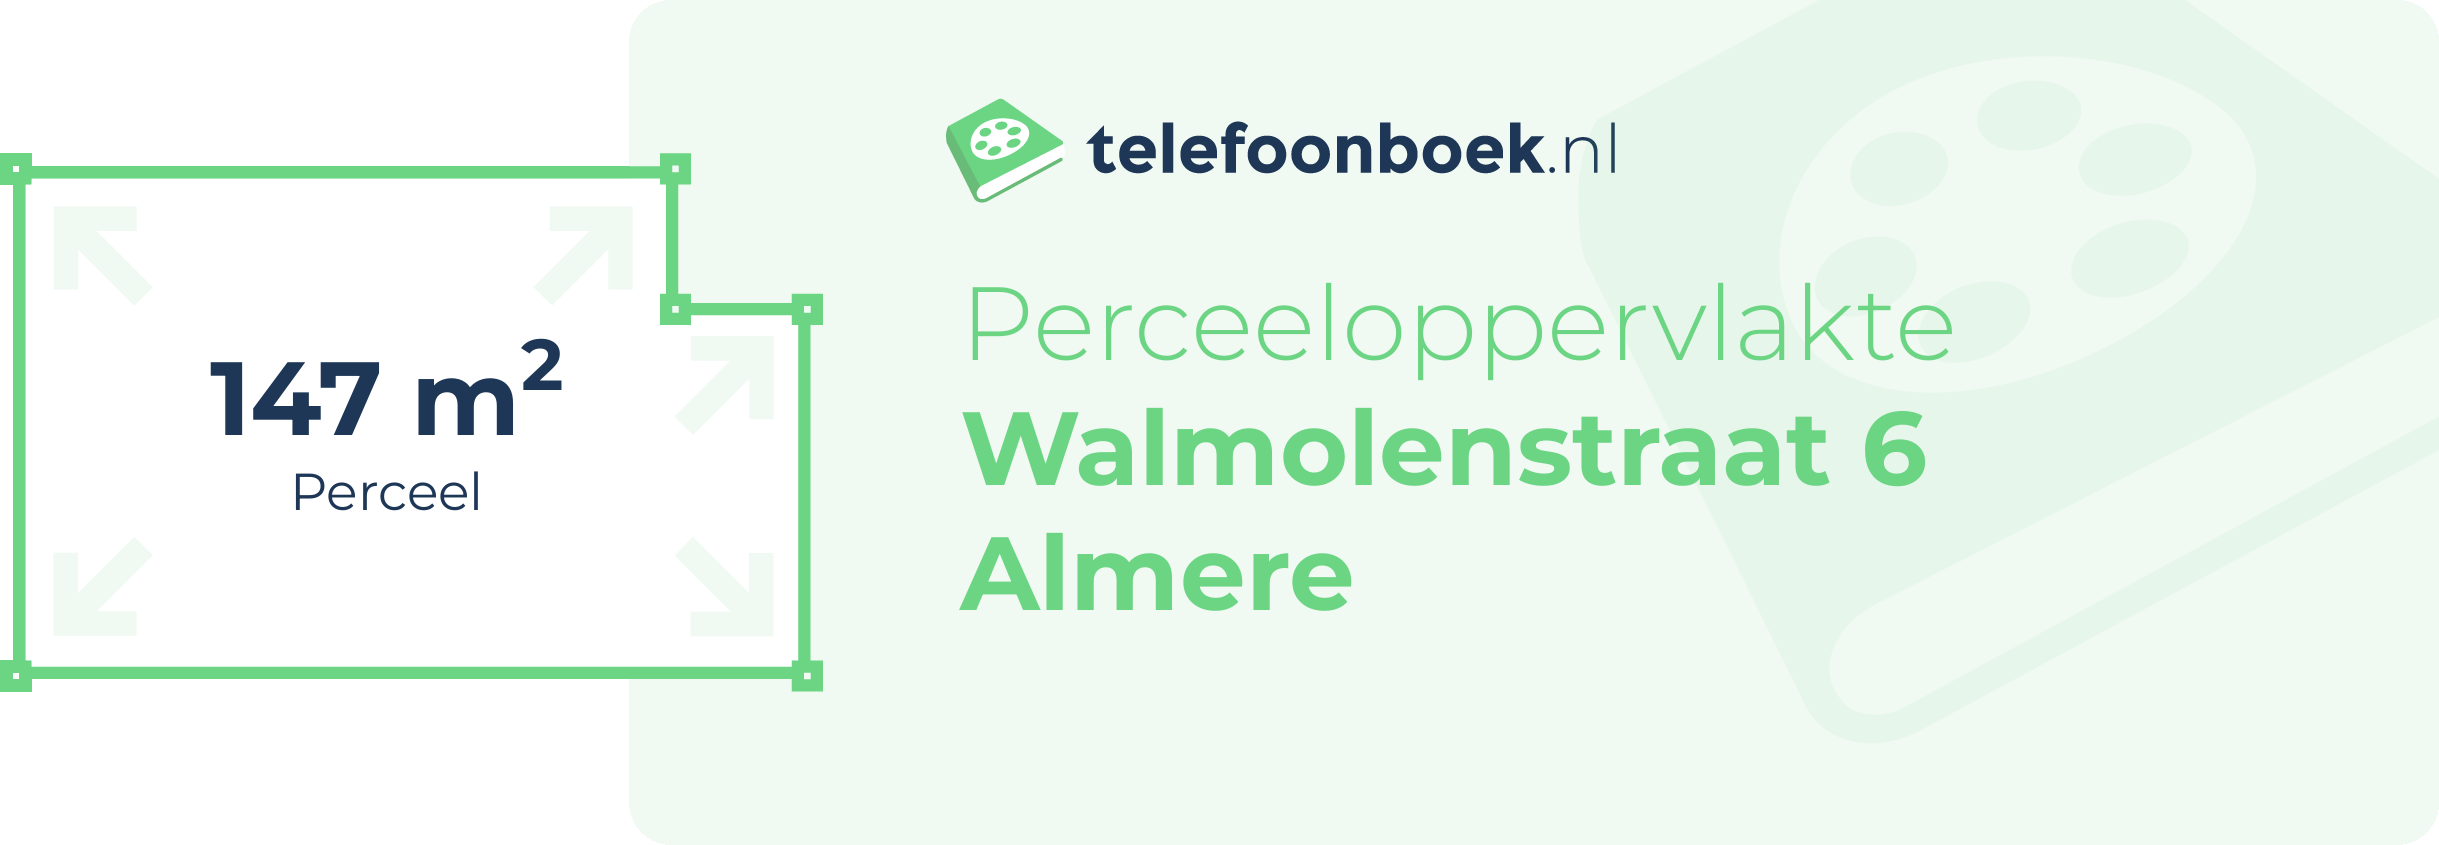 Perceeloppervlakte Walmolenstraat 6 Almere